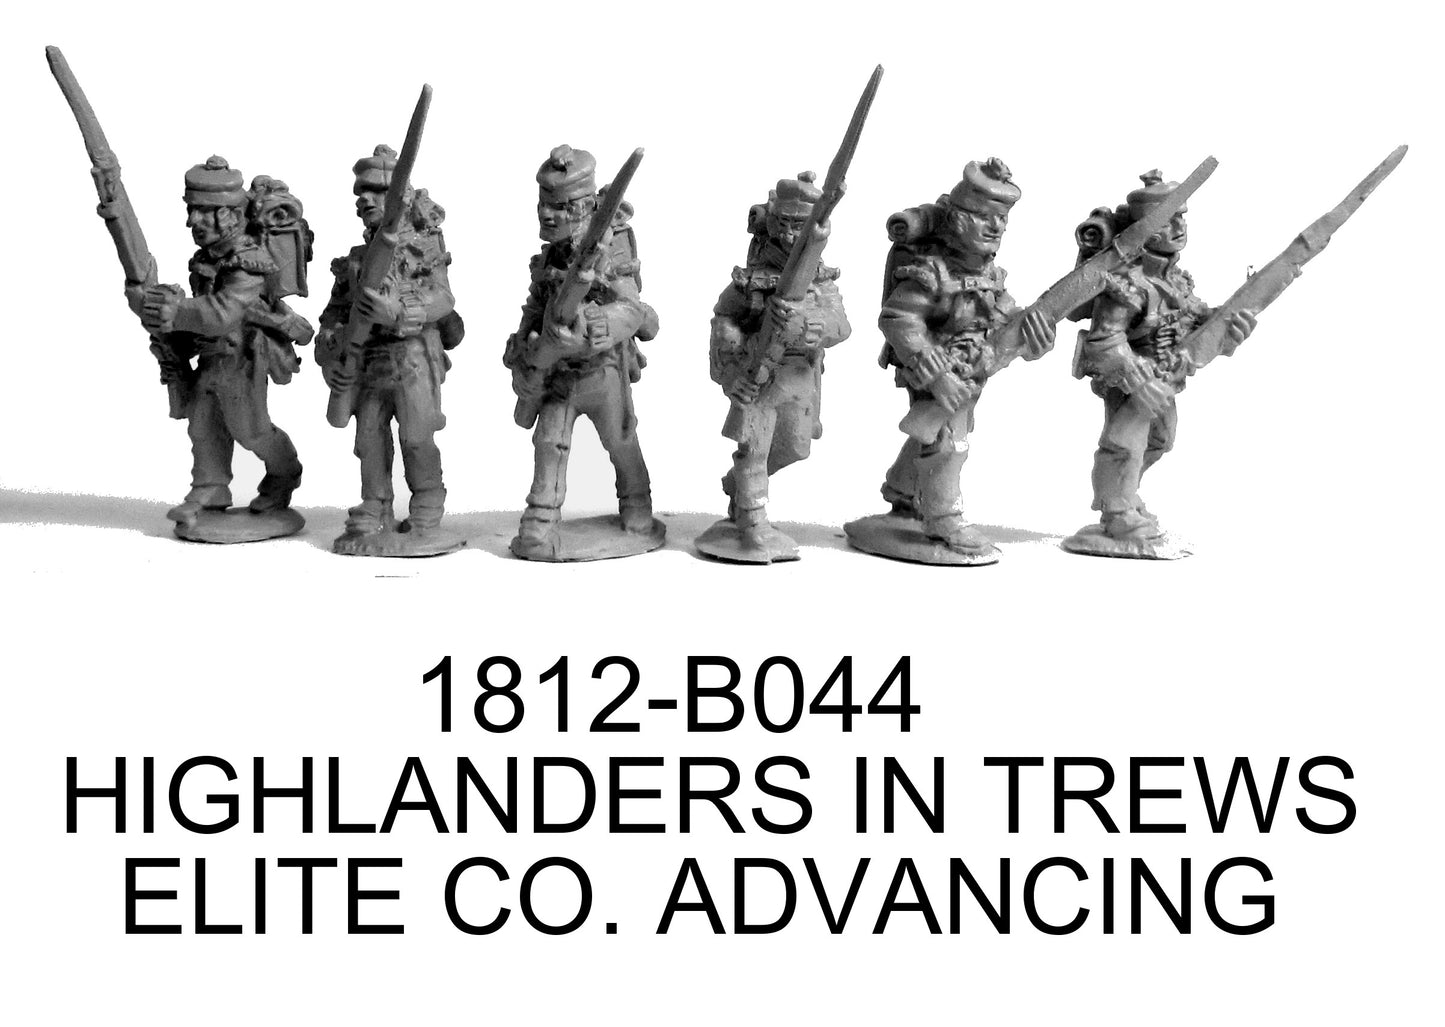 Highland Elite Company in Trews Advancing